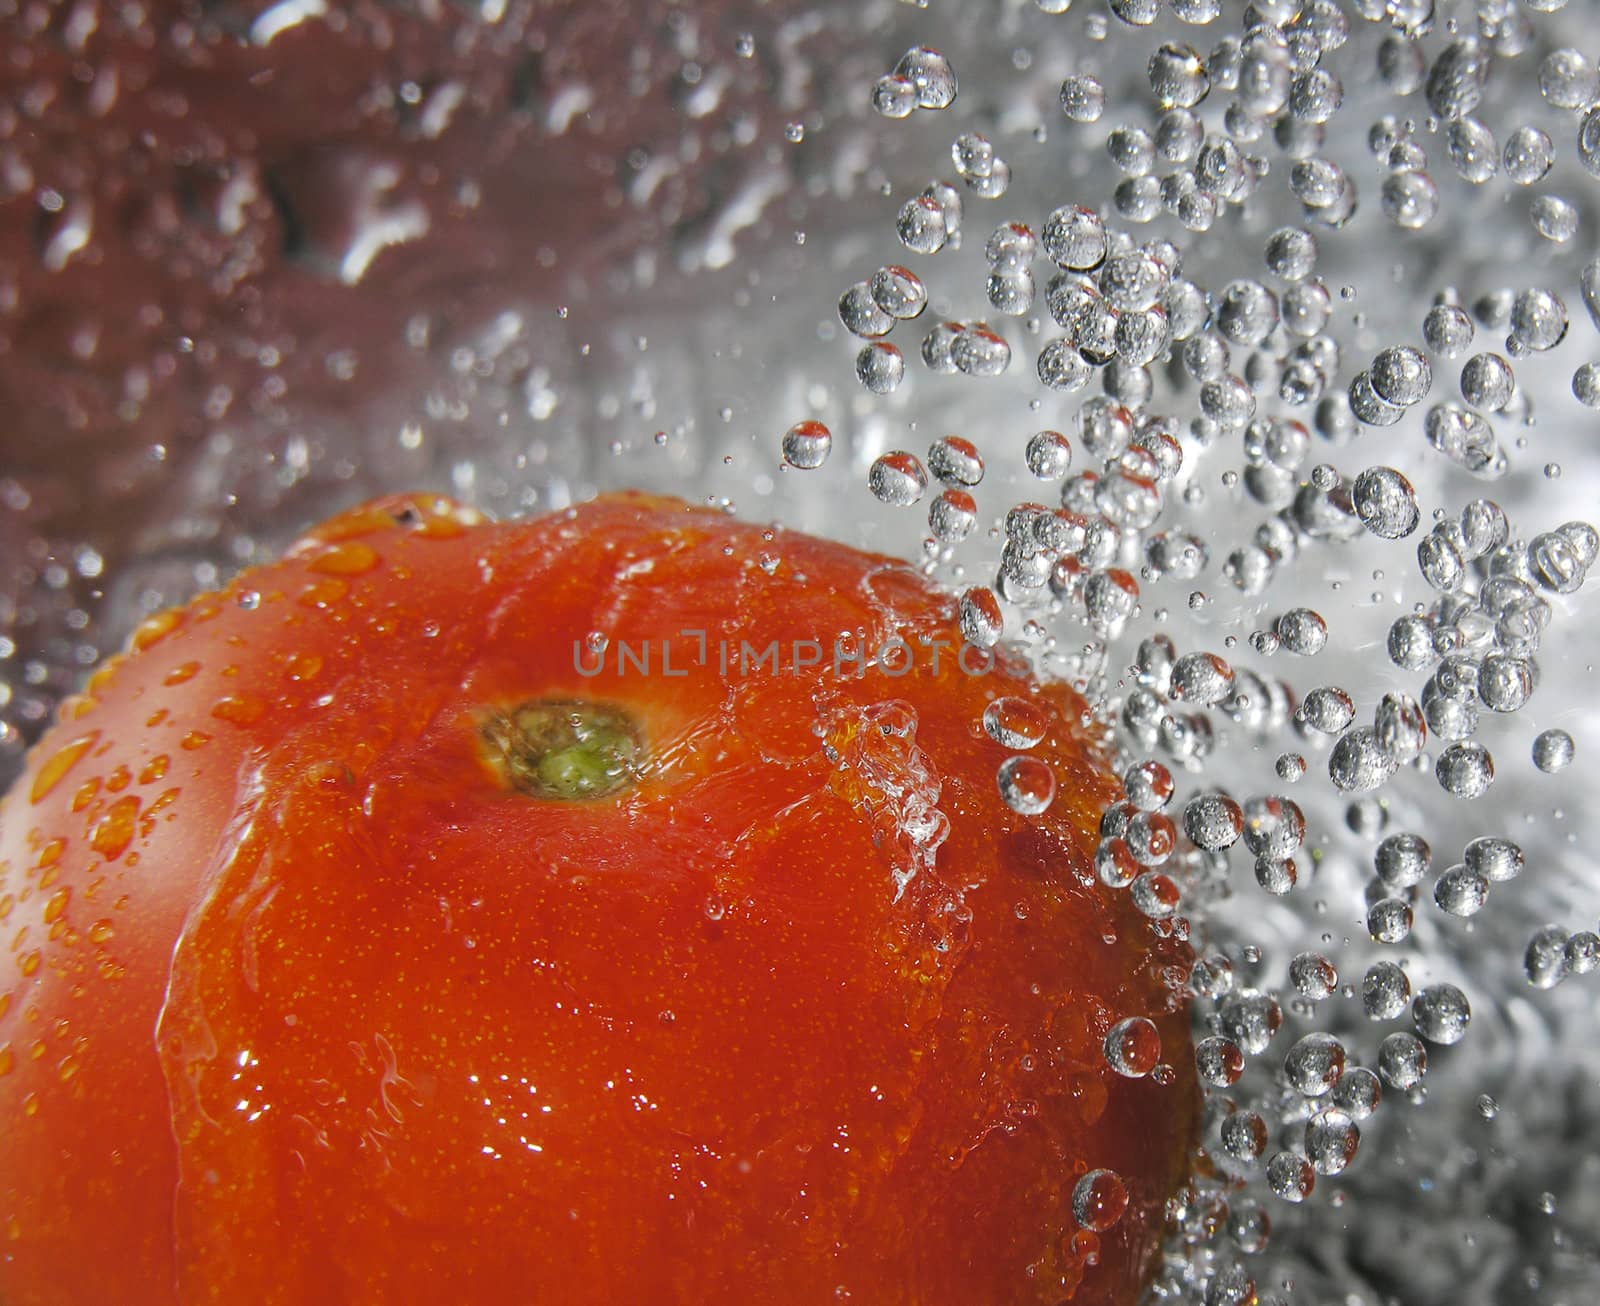 Tomato splashing by kjpargeter